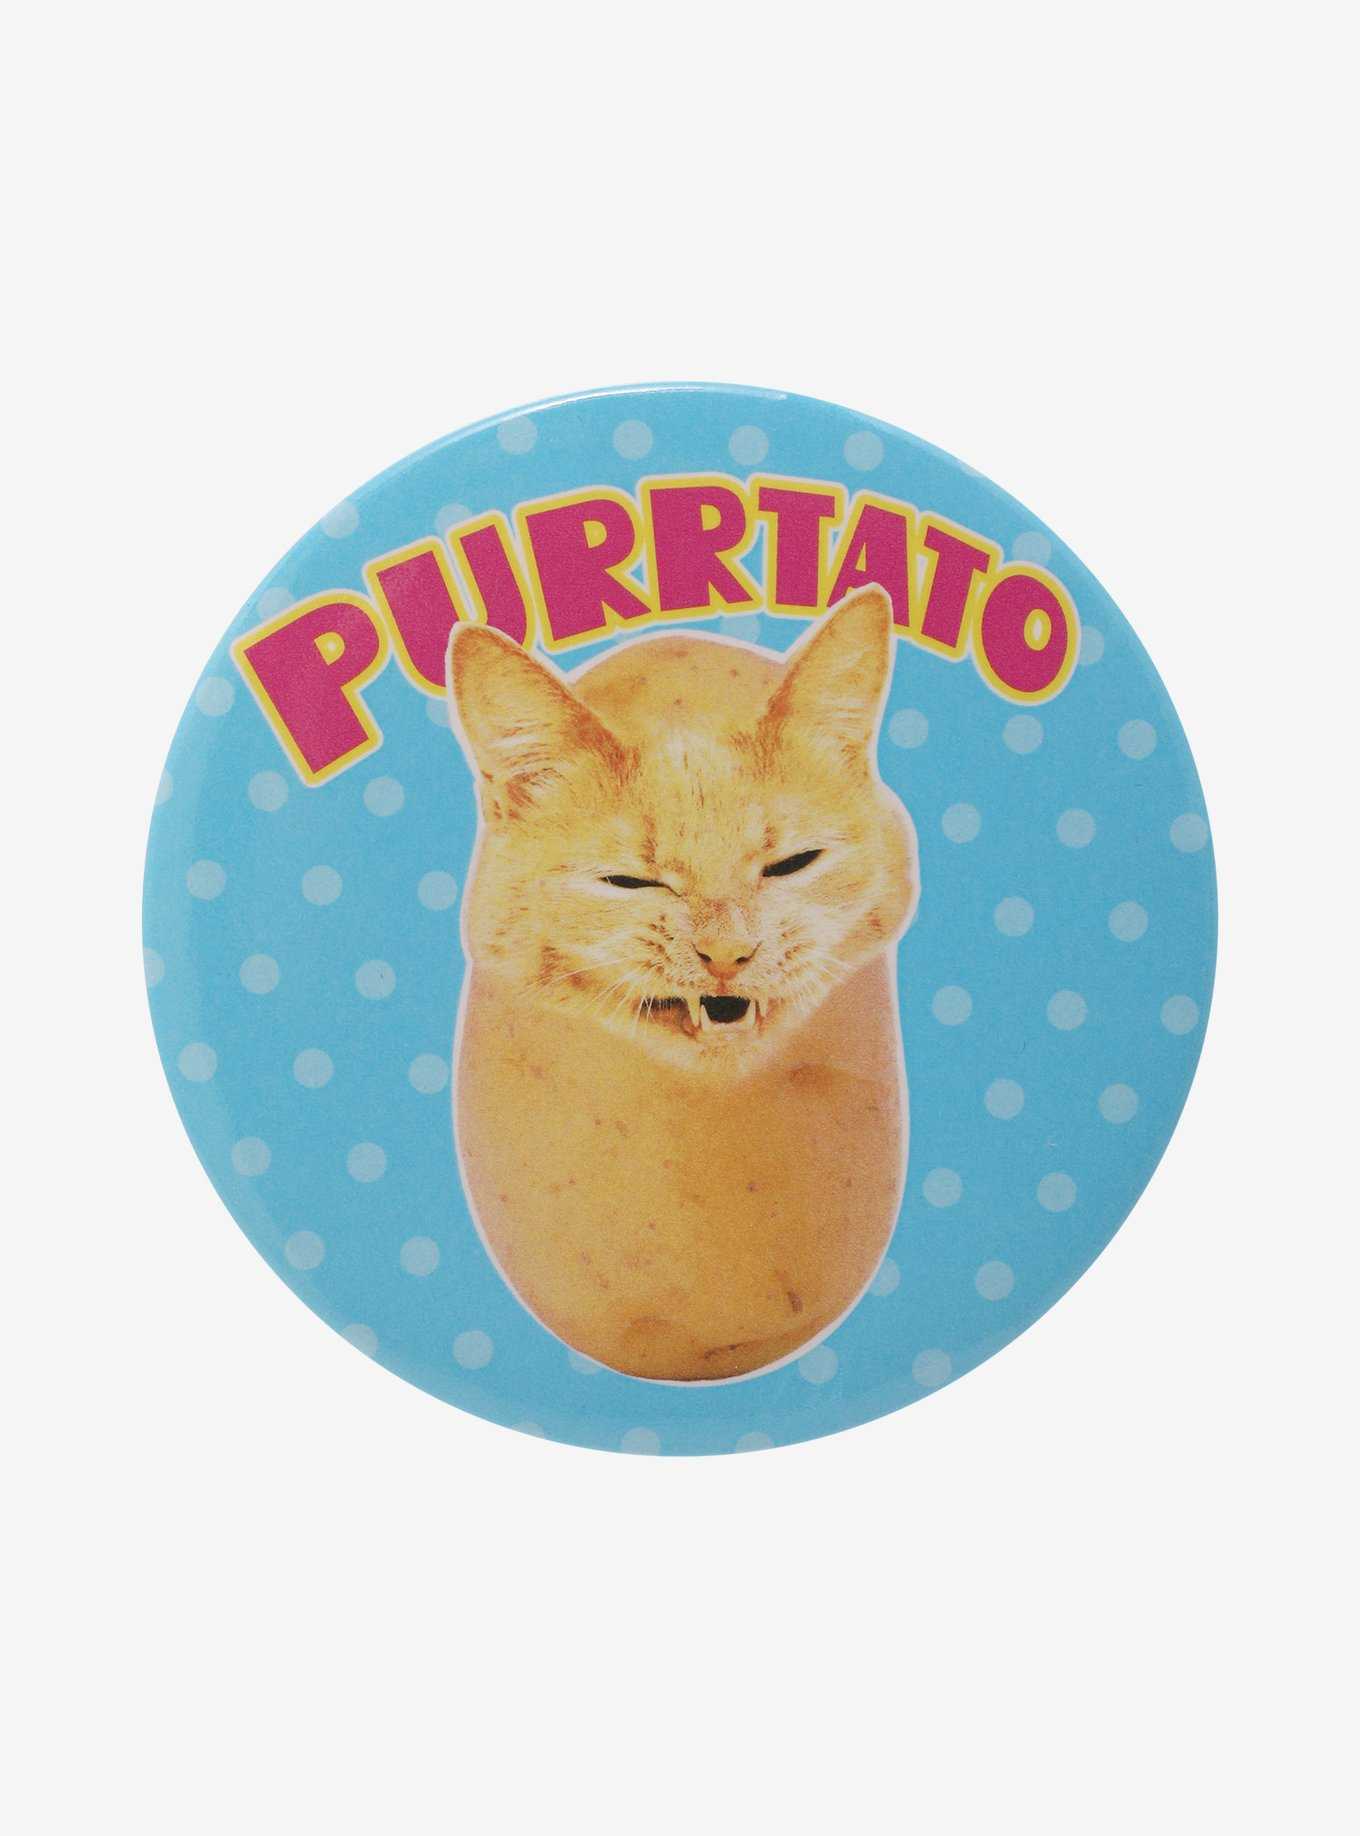 Cat Purrtato 3 Inch Button, , hi-res